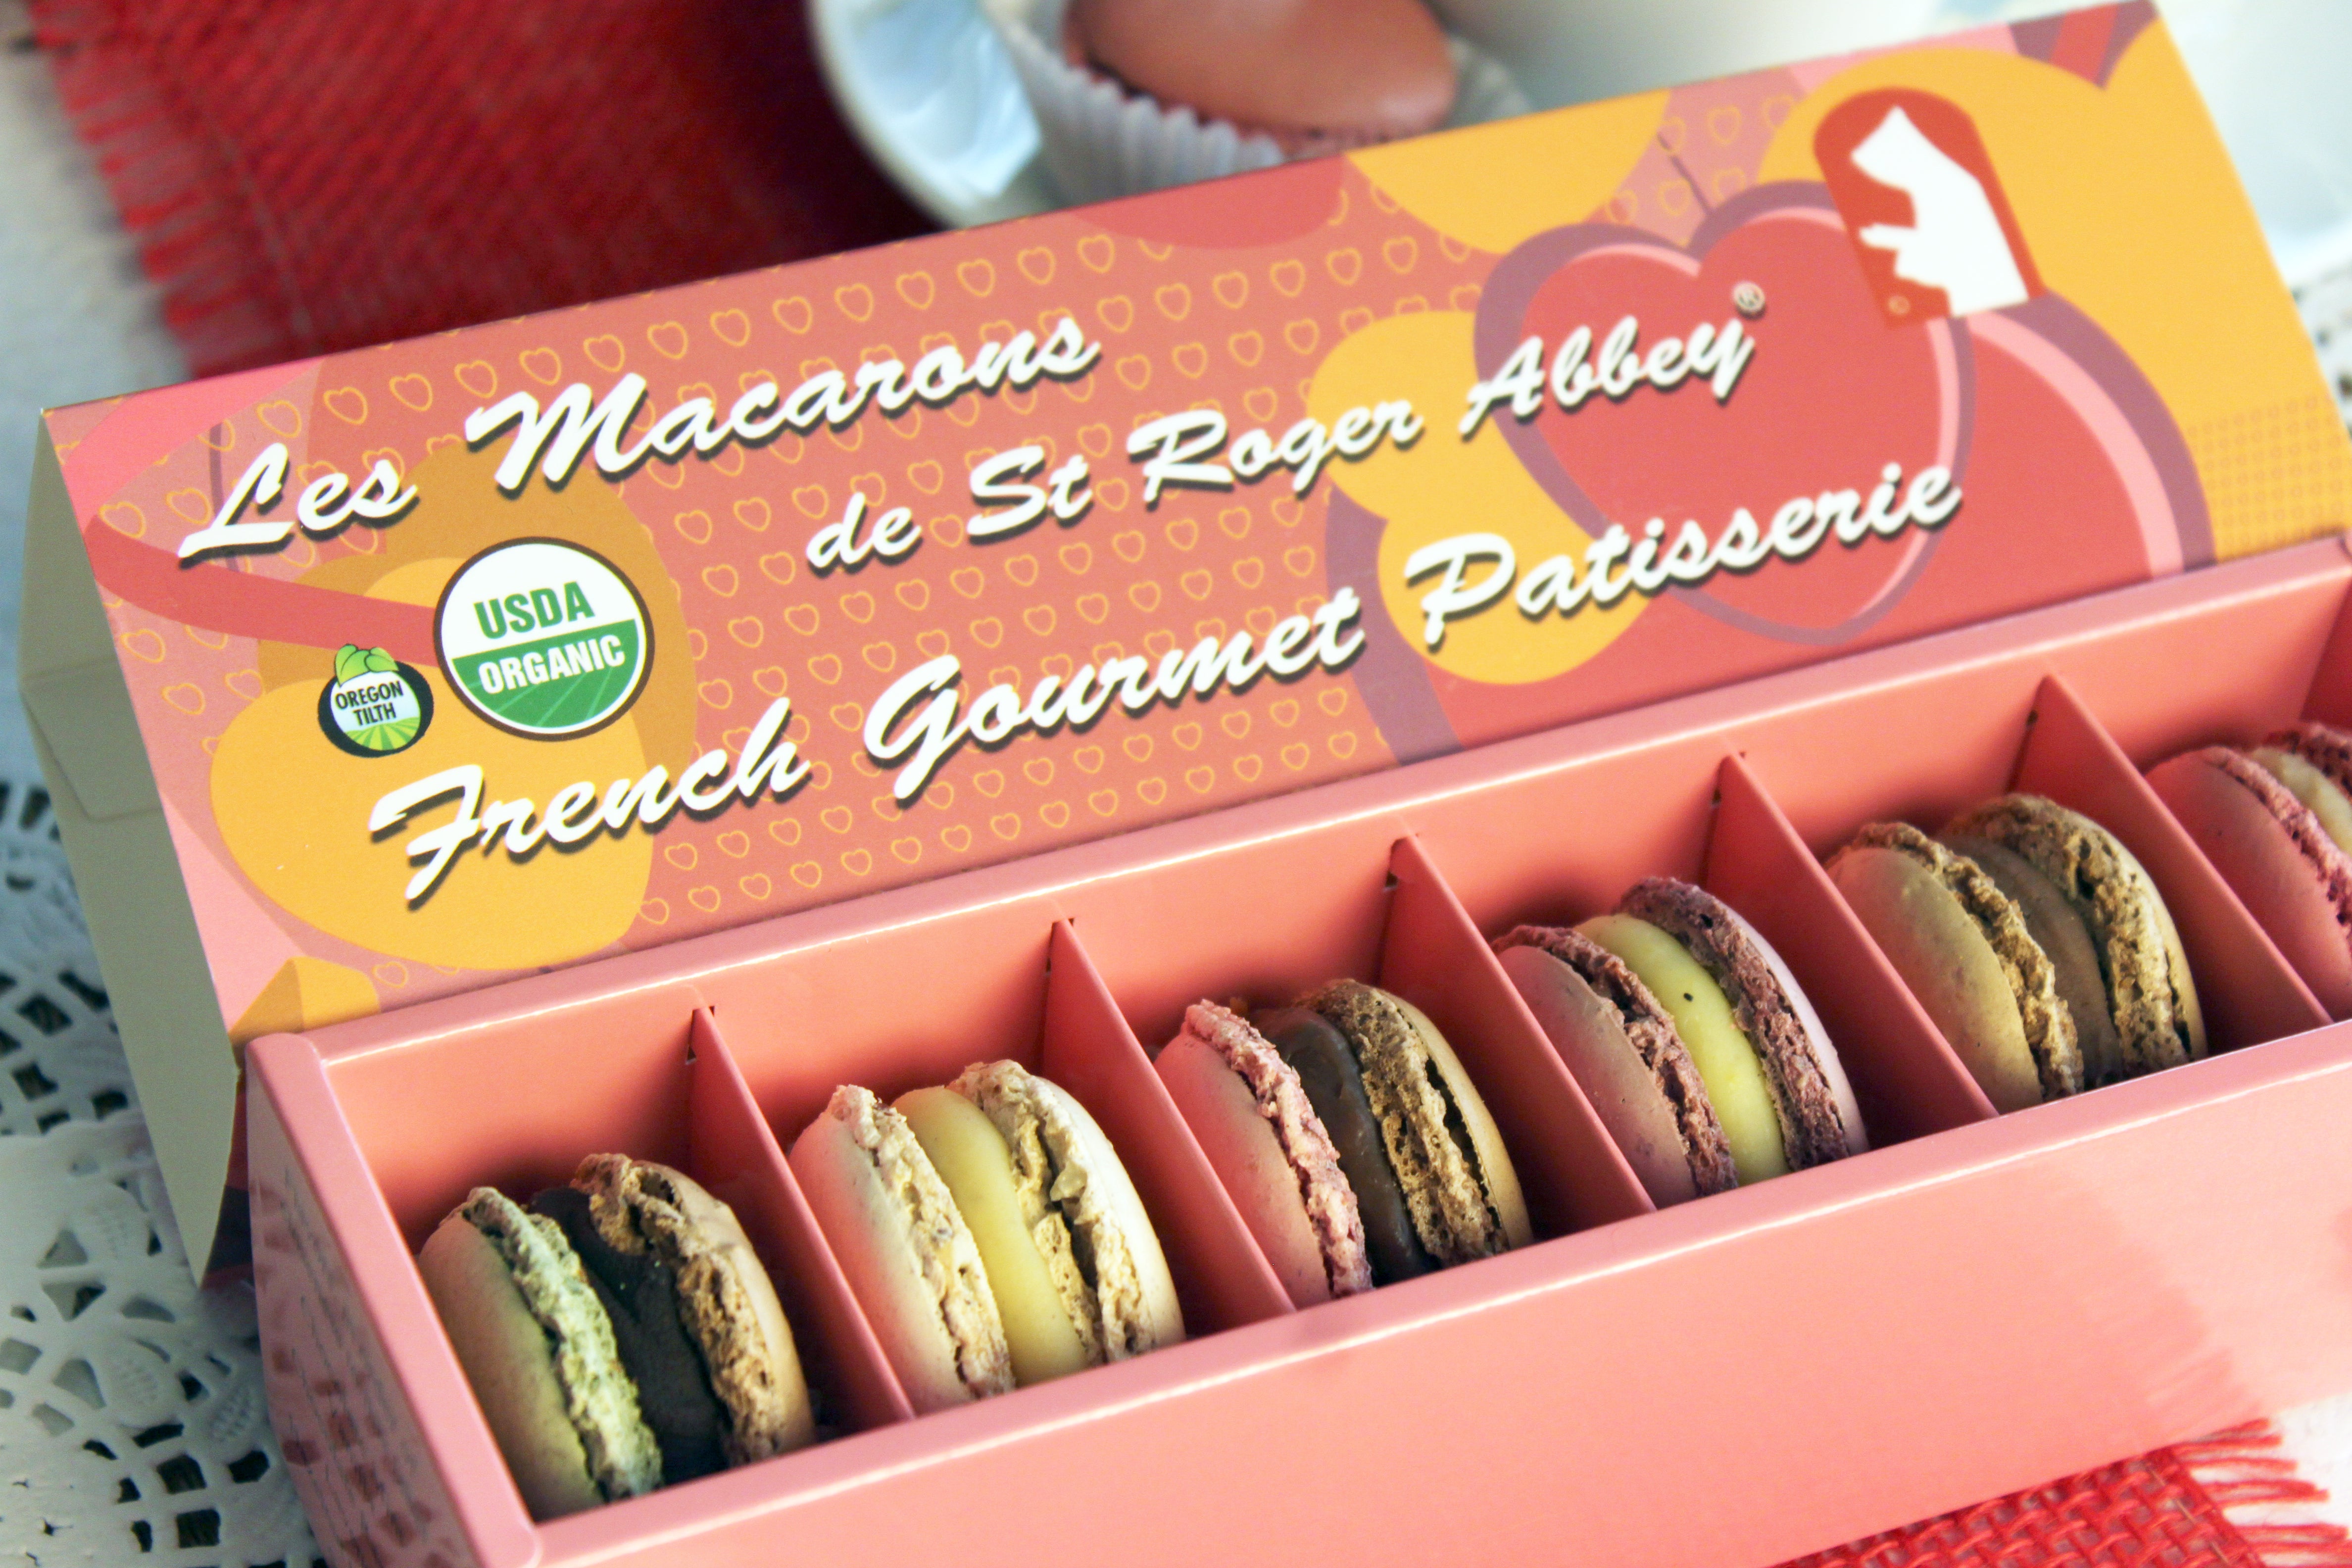 Organic Caring Tenderness 6-French Macaron Assortment